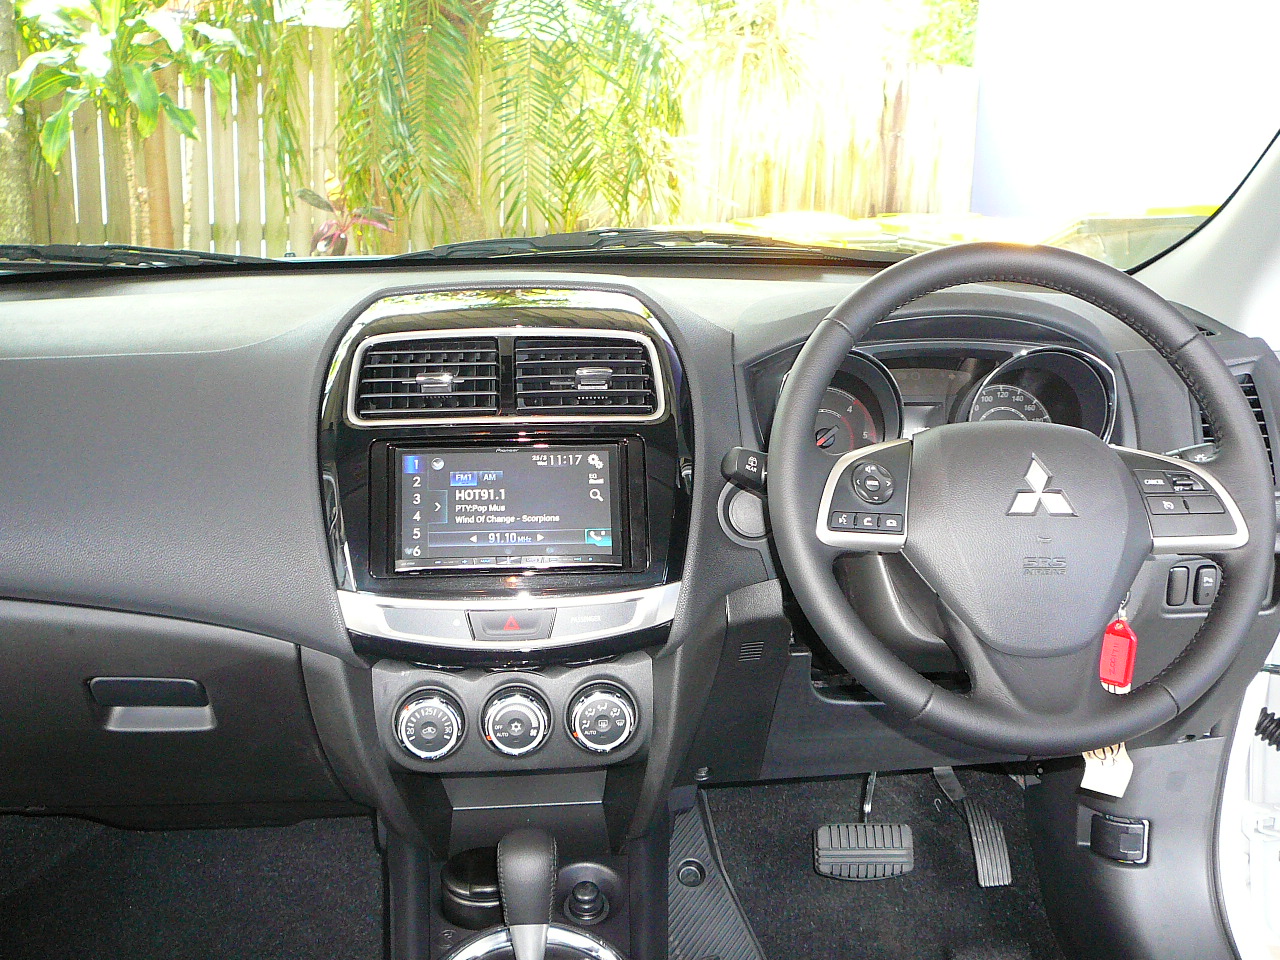 Mitsubishi ASX 2015, Pioneer Avic-F70DAB GPS Navigation System Installation